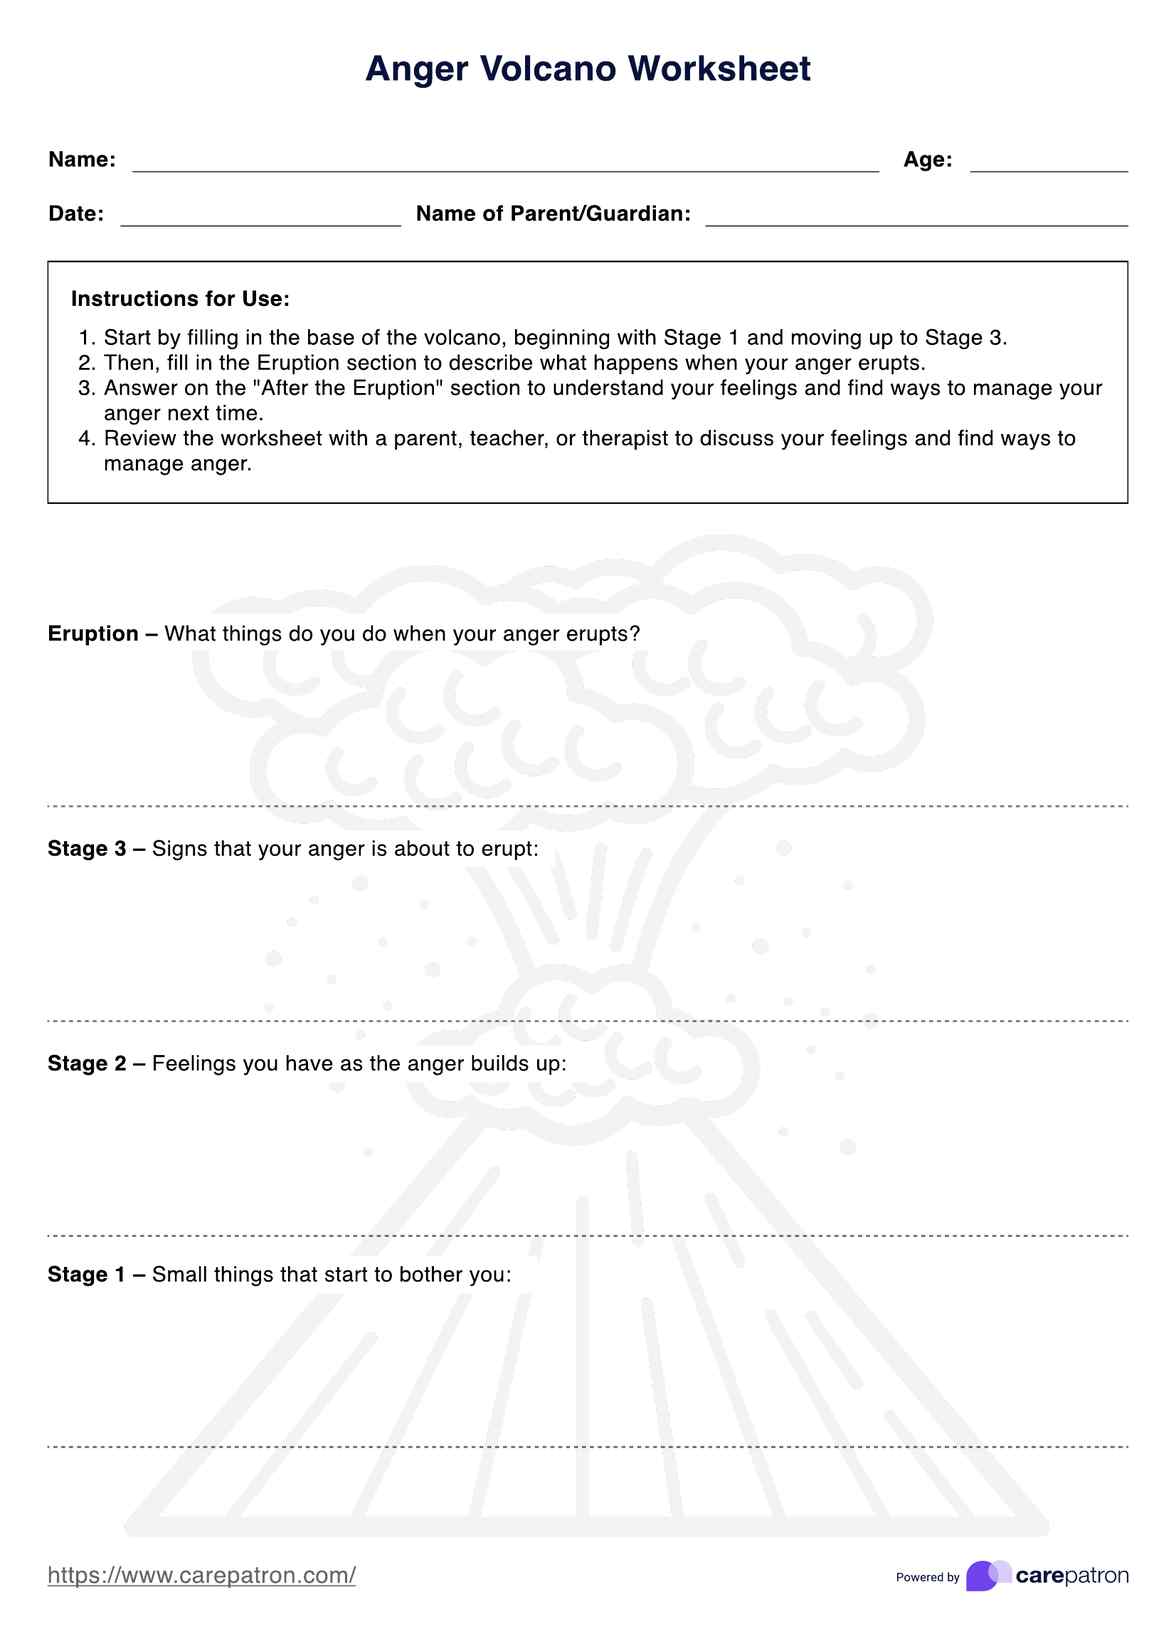 Anger Volcano Worksheet PDF Example